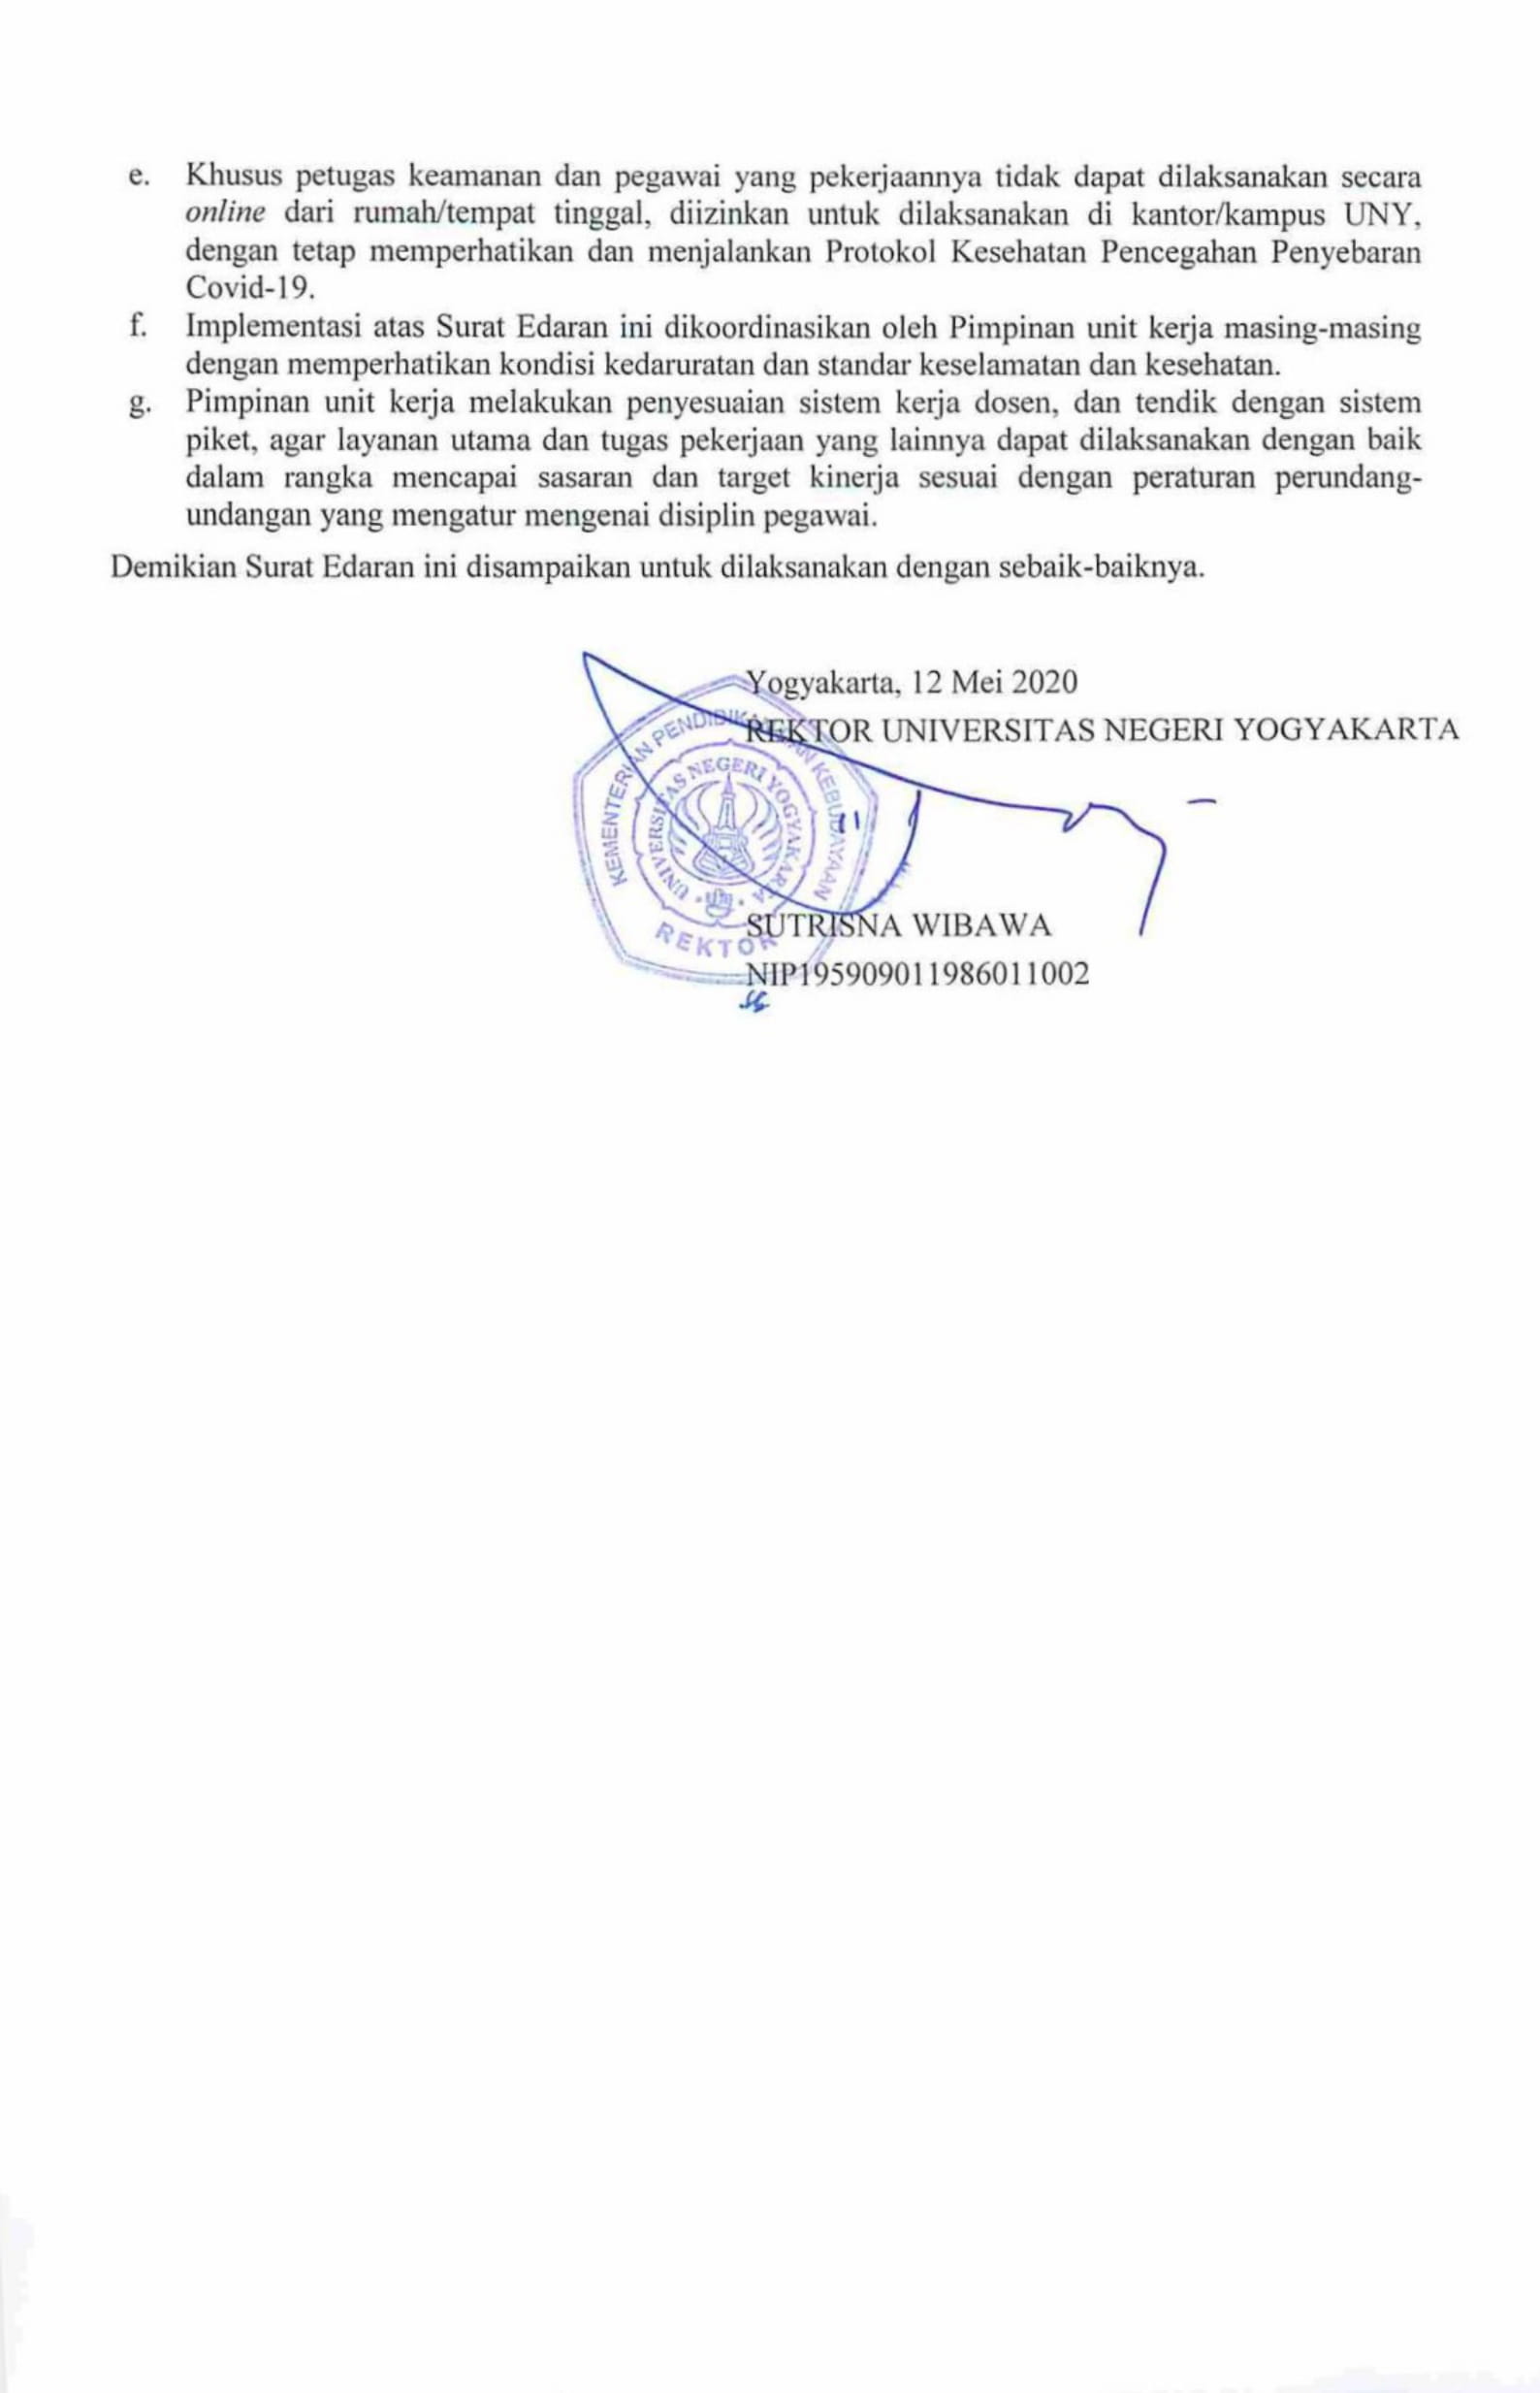 SURAT EDARAN NO 15/SE/2020 tentang Perpanjangan Masa Pembatasan Kegiatan di Kampus untuk Pencegahan Penyebaran Corona Virus Disease 2019 (Covid-19) di Universitas Negeri Yogyakarta